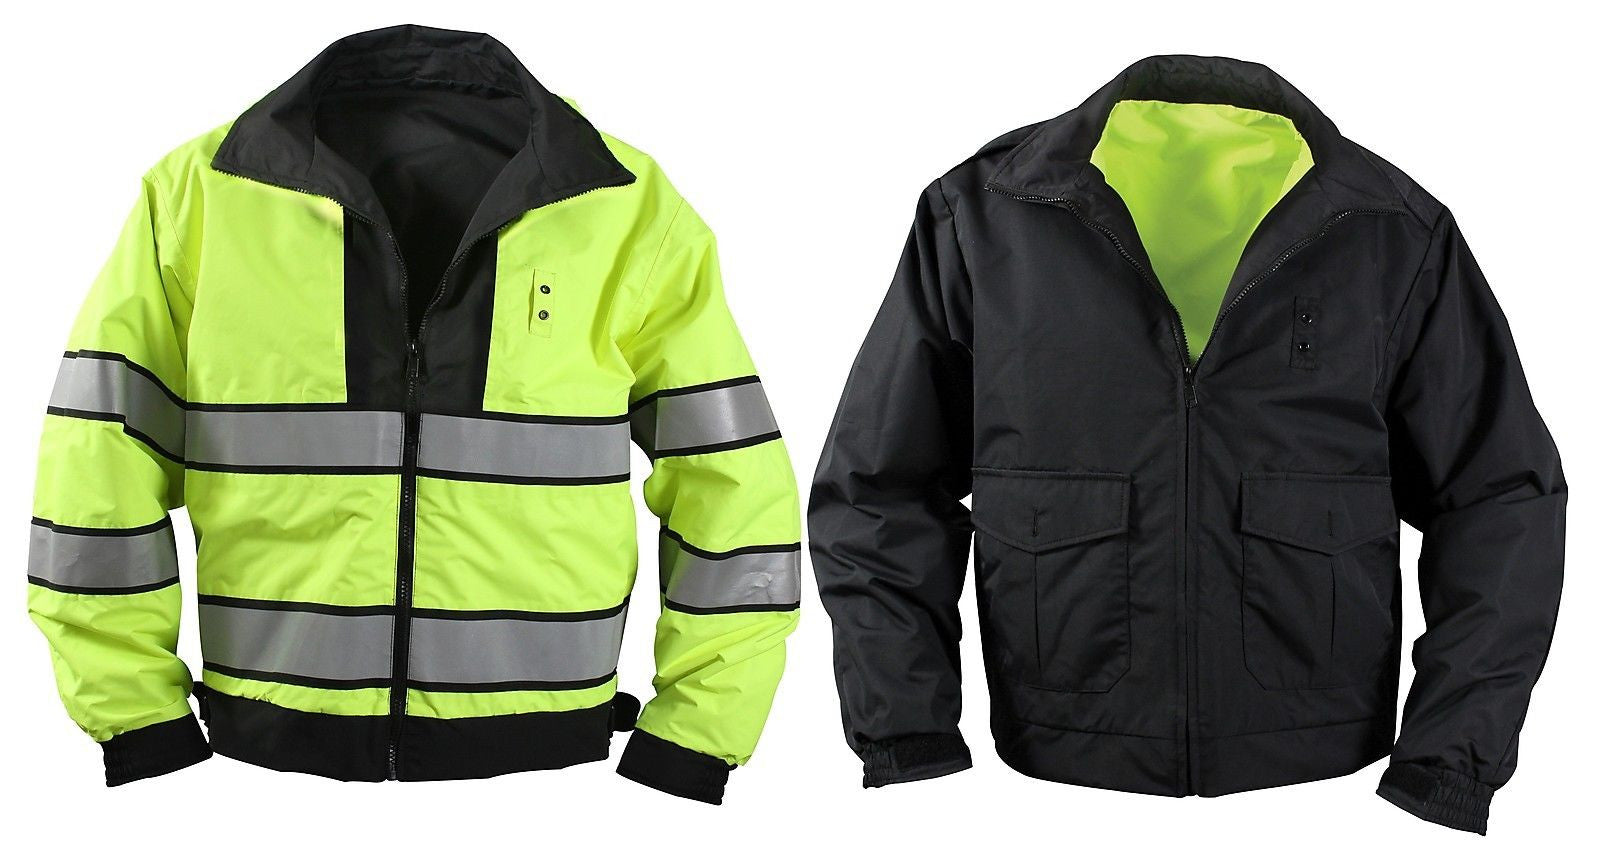 Rothco Reversible Hi-Visibility Uniform Jacket